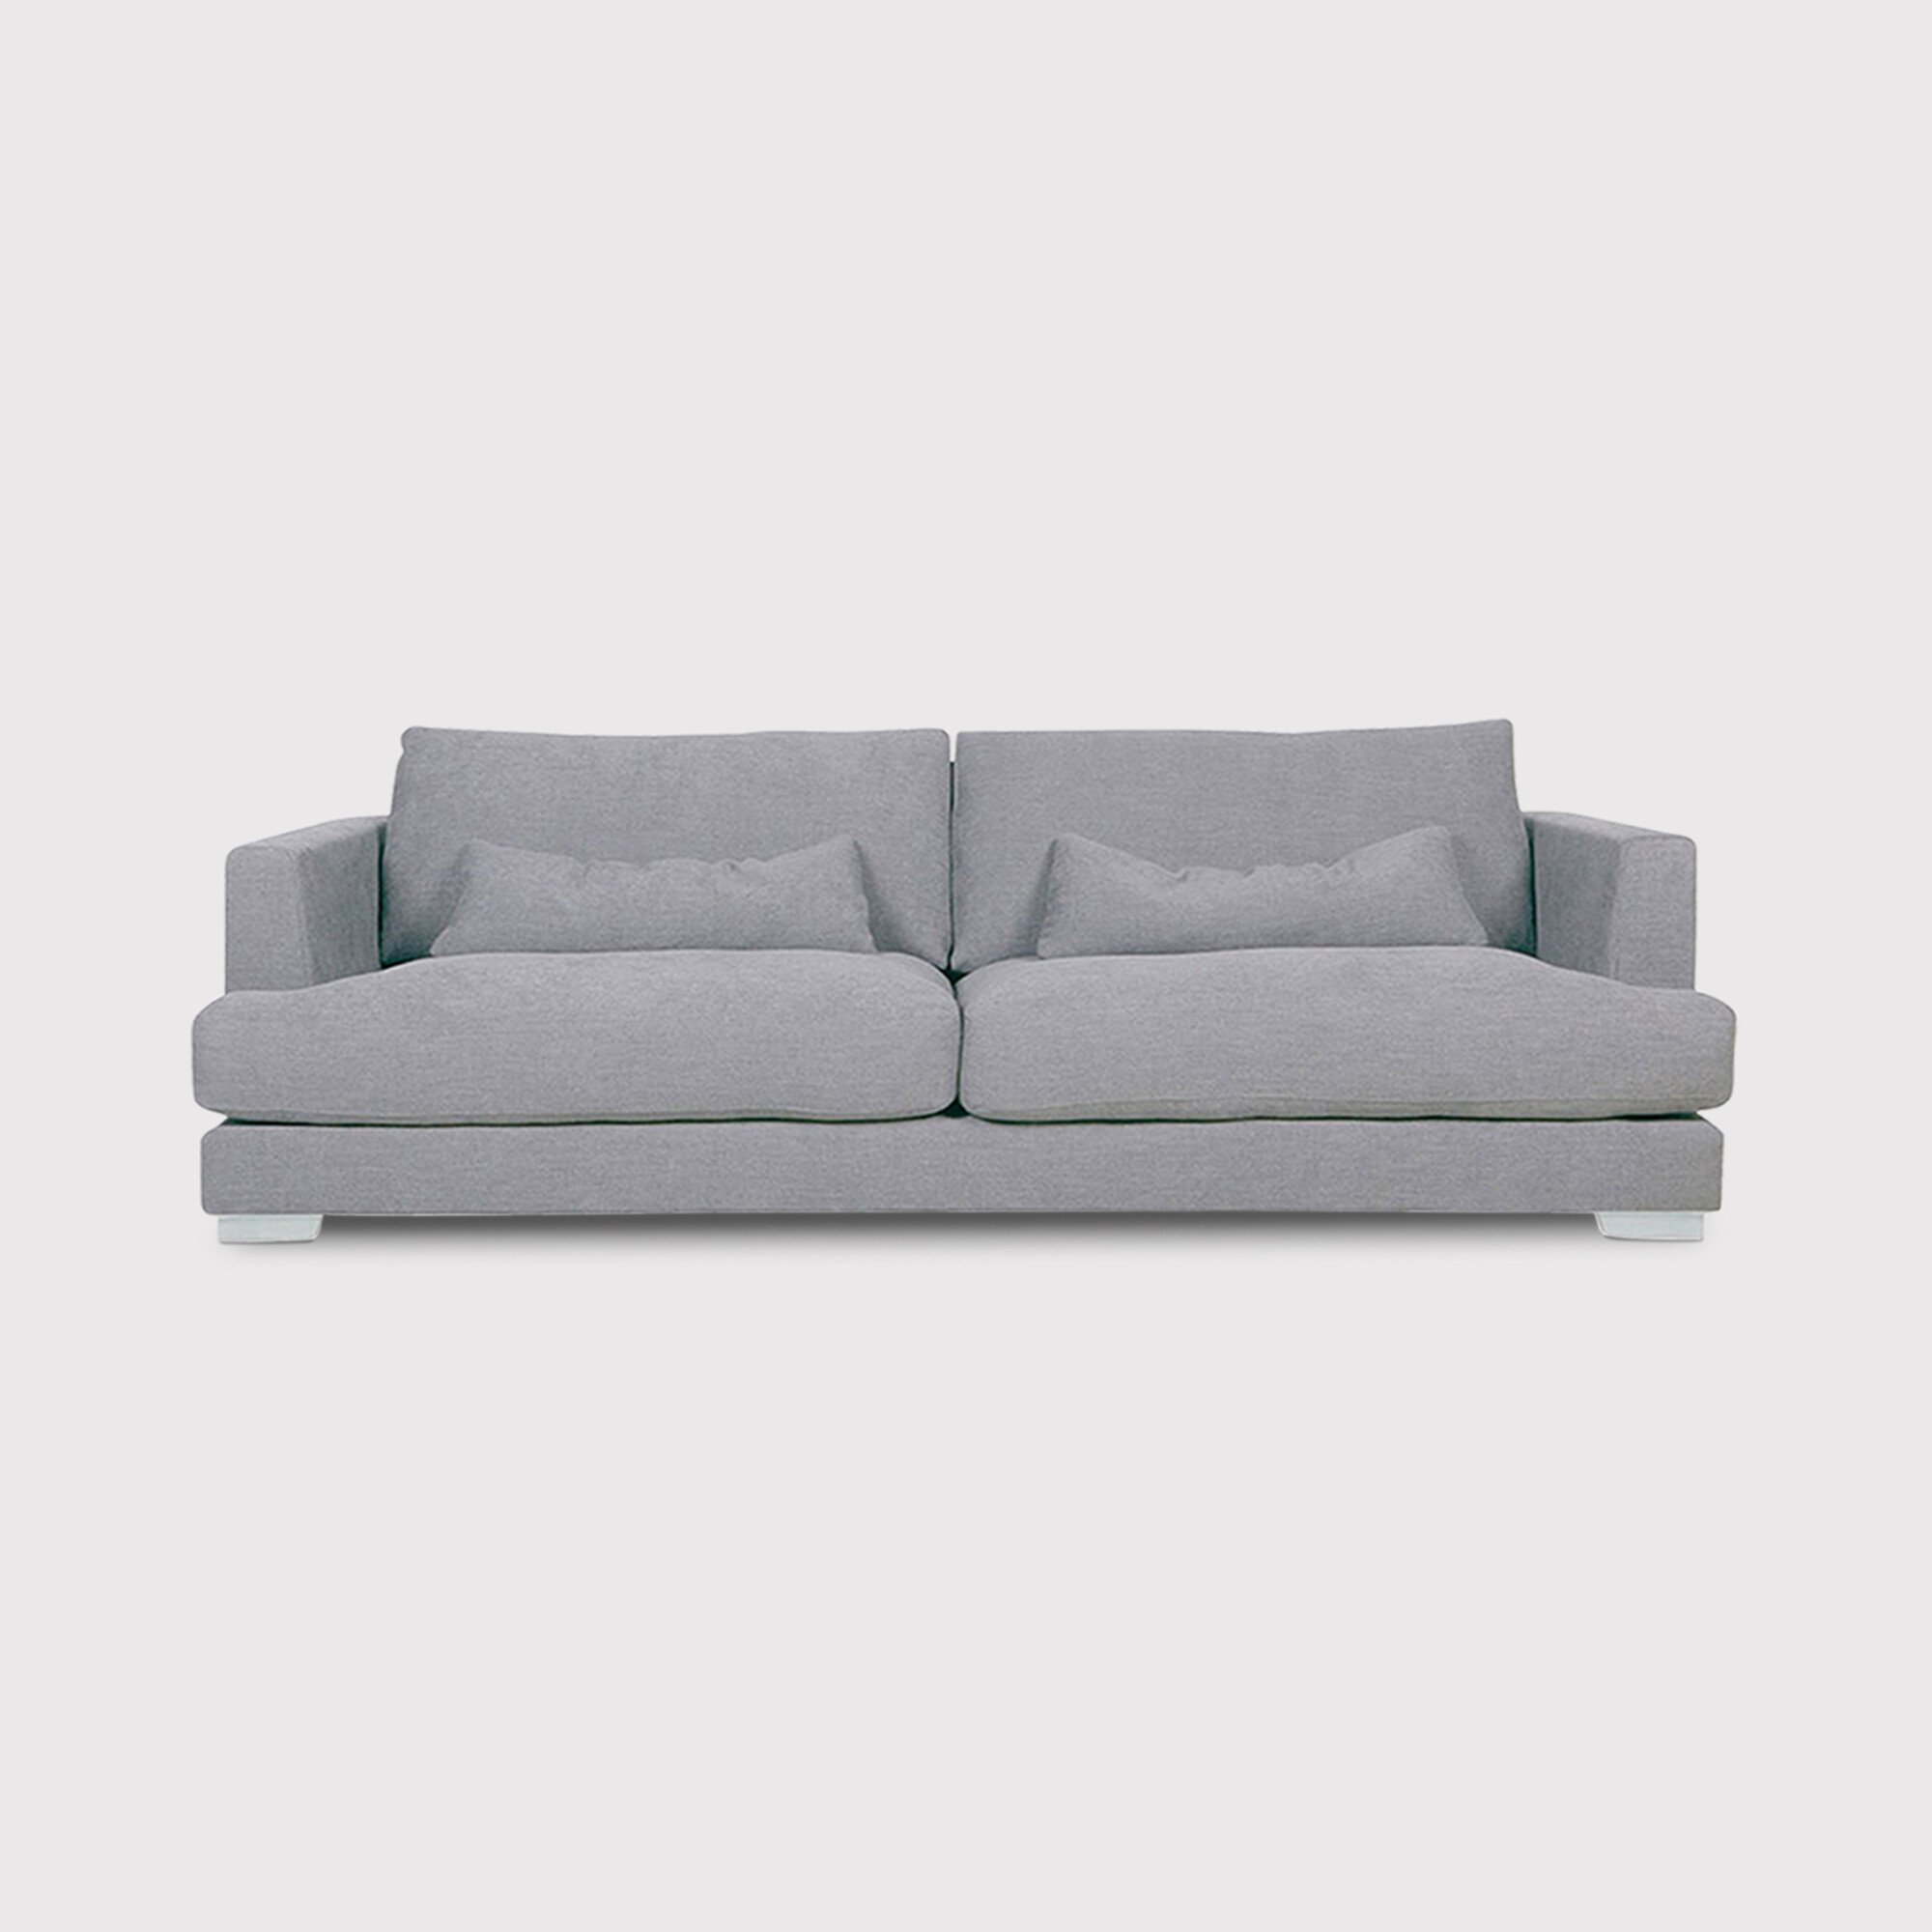 Flavin 3 Seater Sofa, Grey Fabric | Barker & Stonehouse